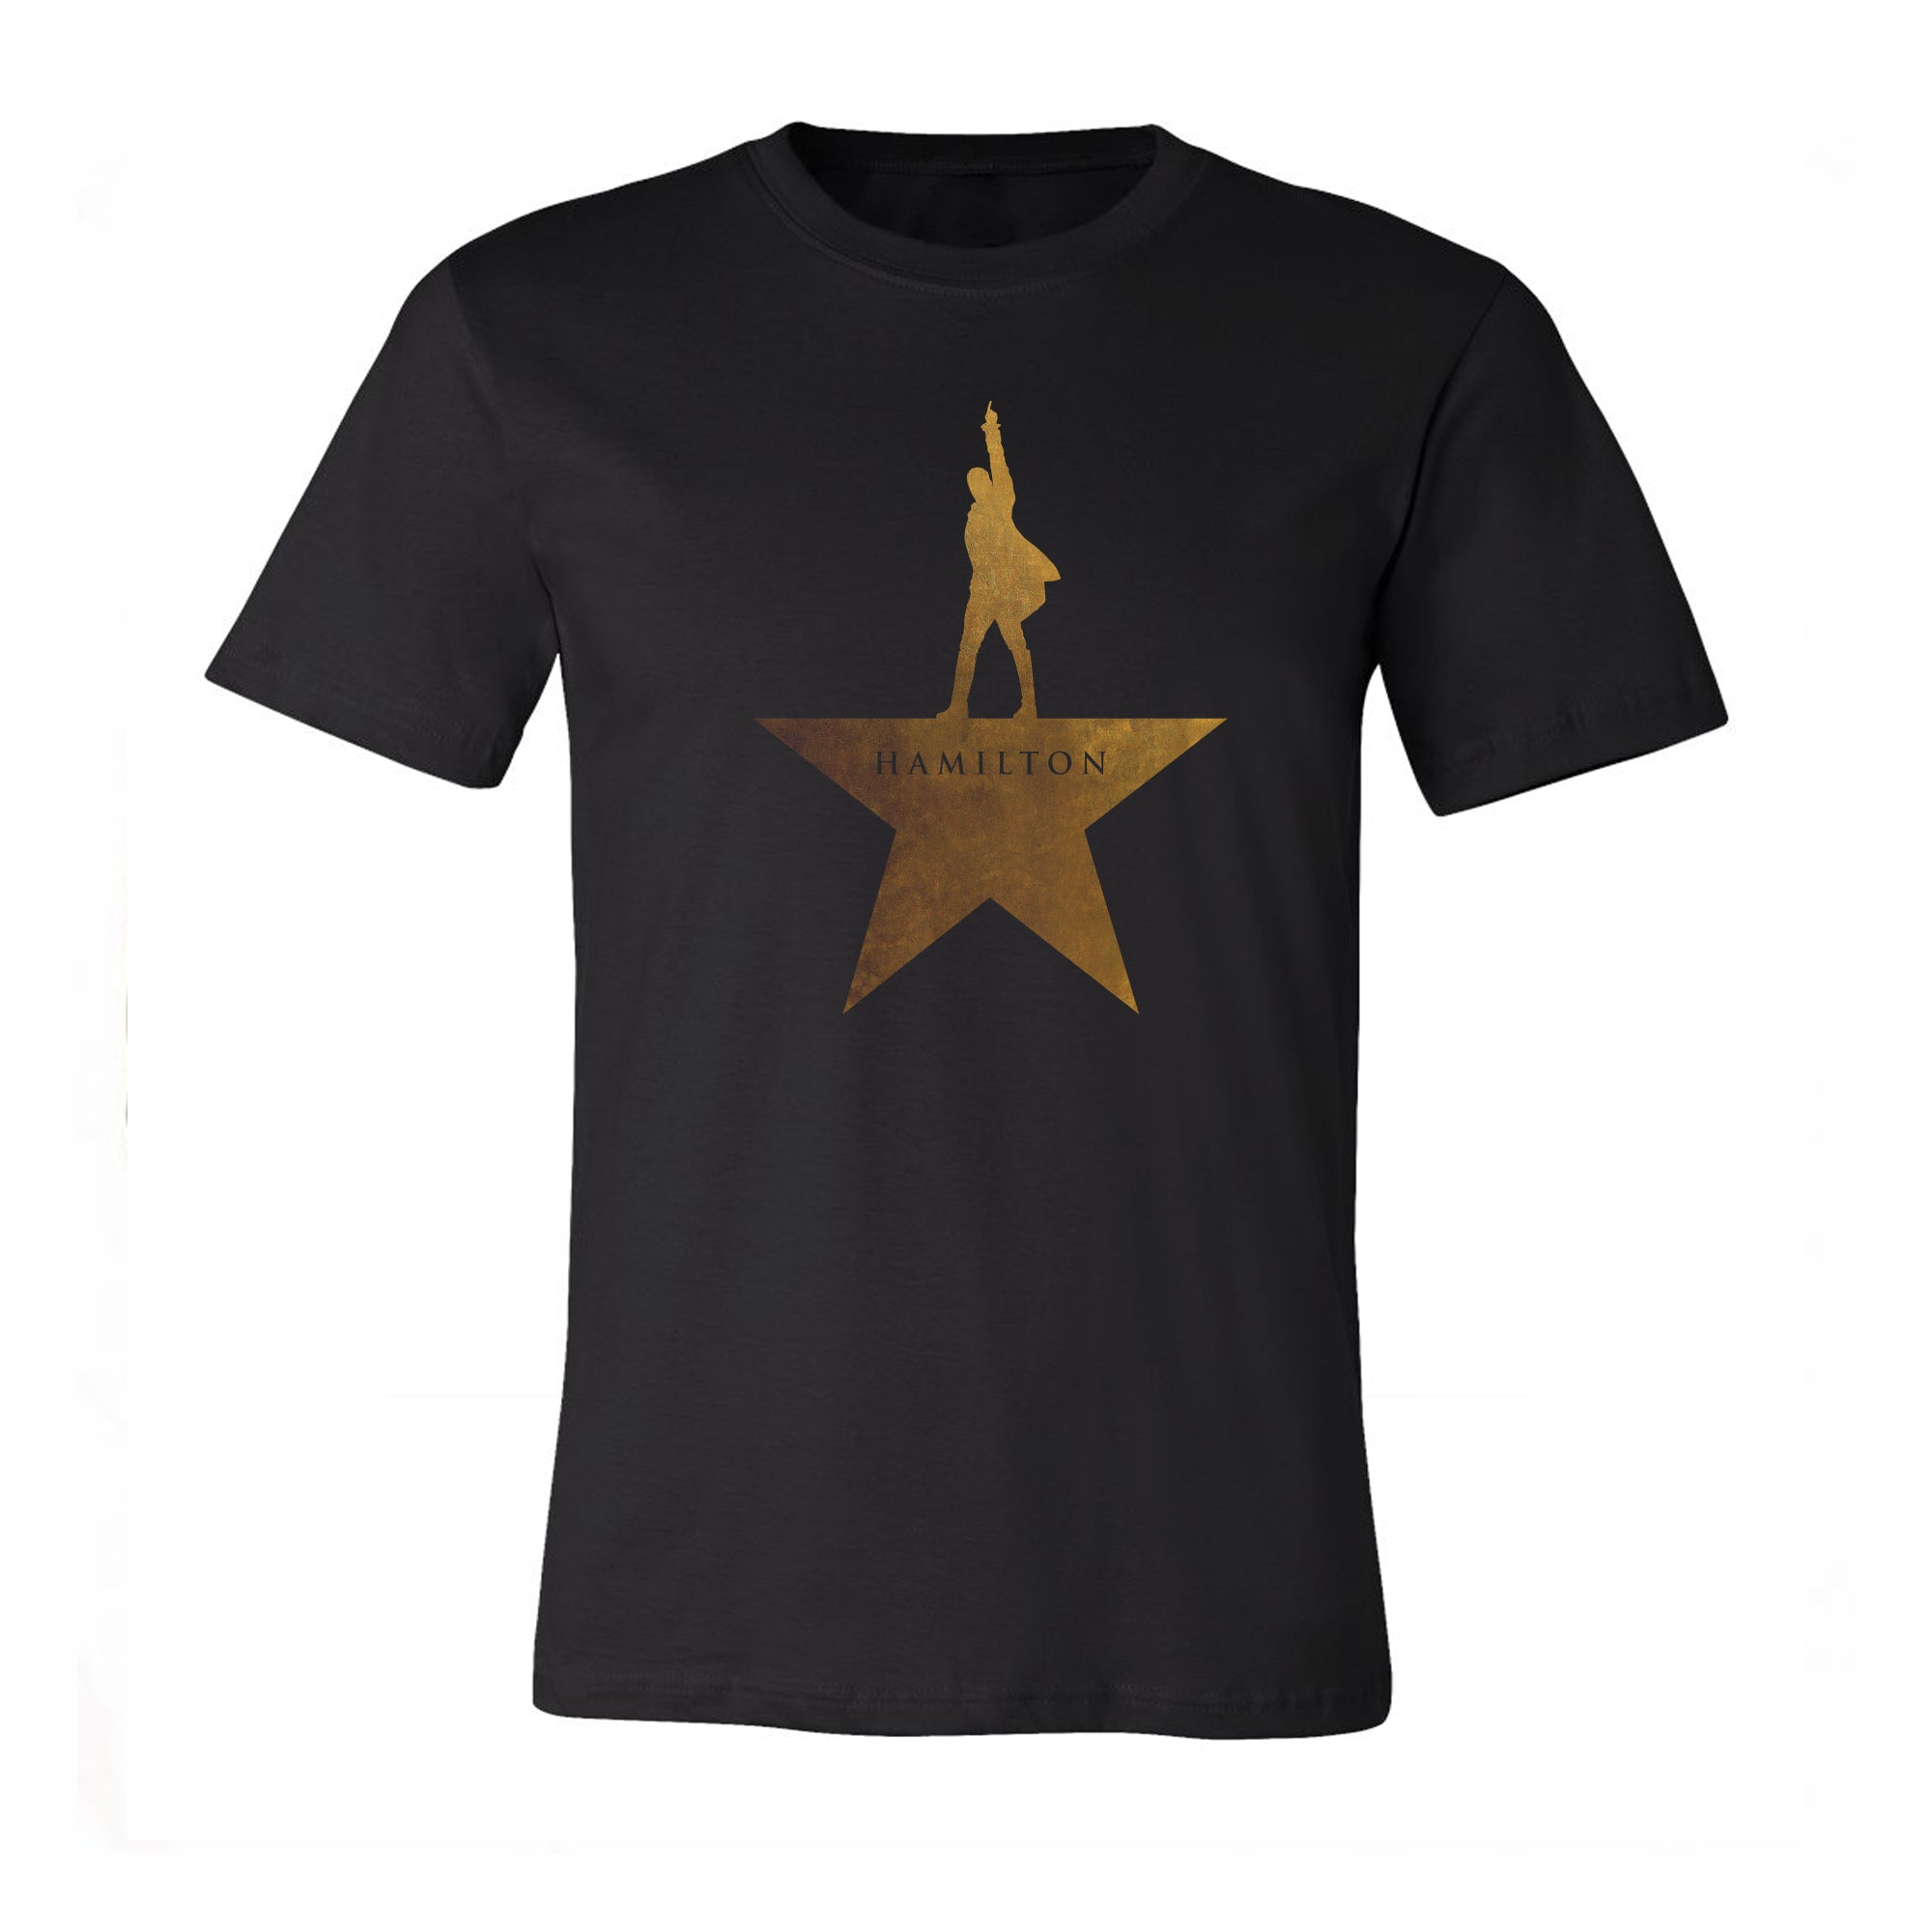 HAMILTON Gold Star T-Shirt Image